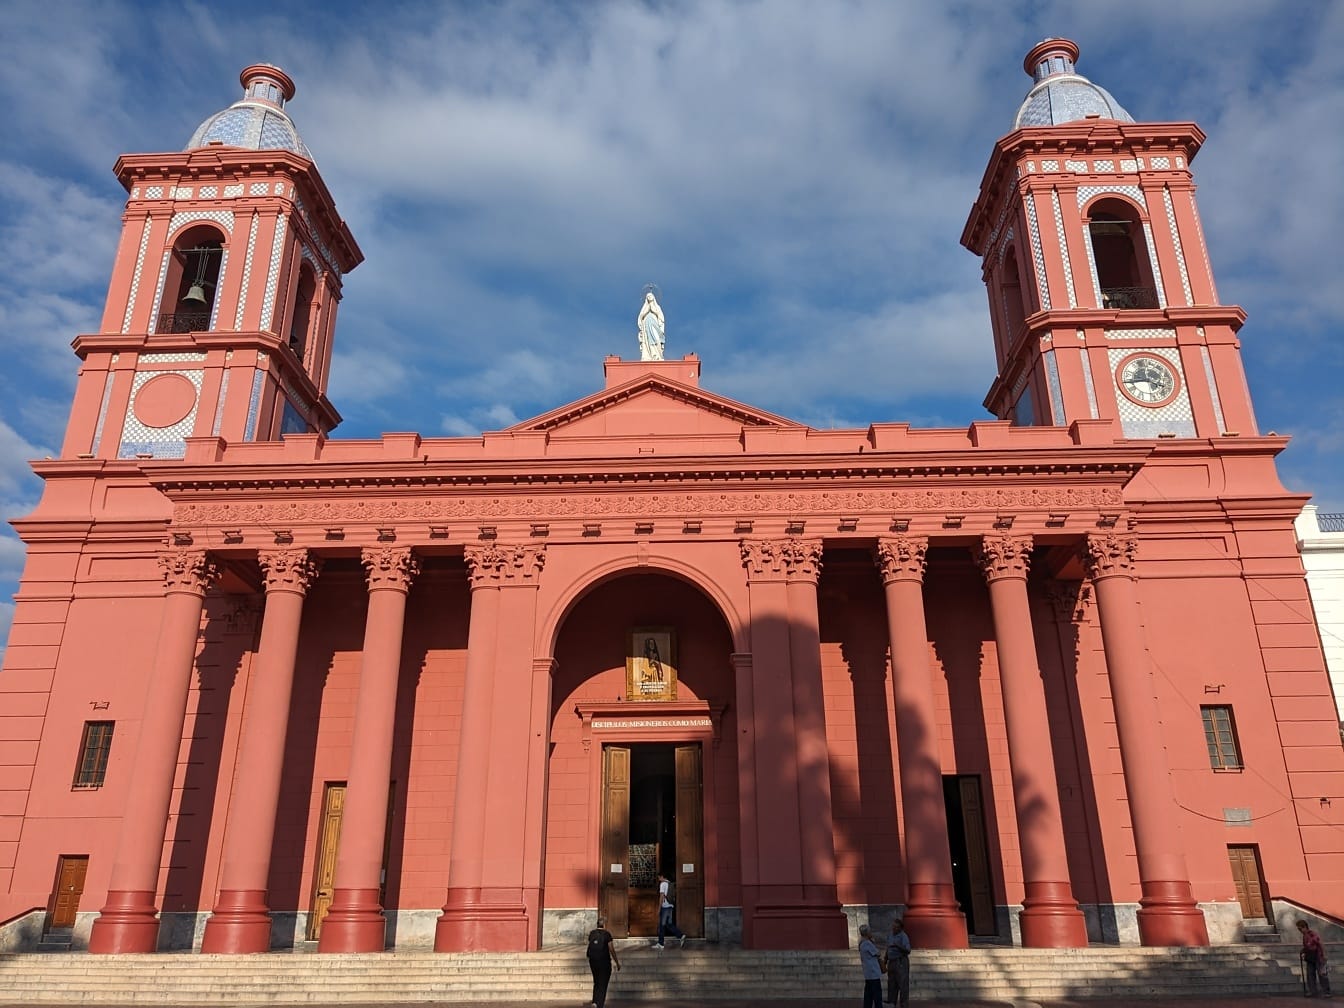 Katedralbasilikan Our Lady of the Valley i Catamarca i Argentina med två torn i kolonial arkitektonisk stil